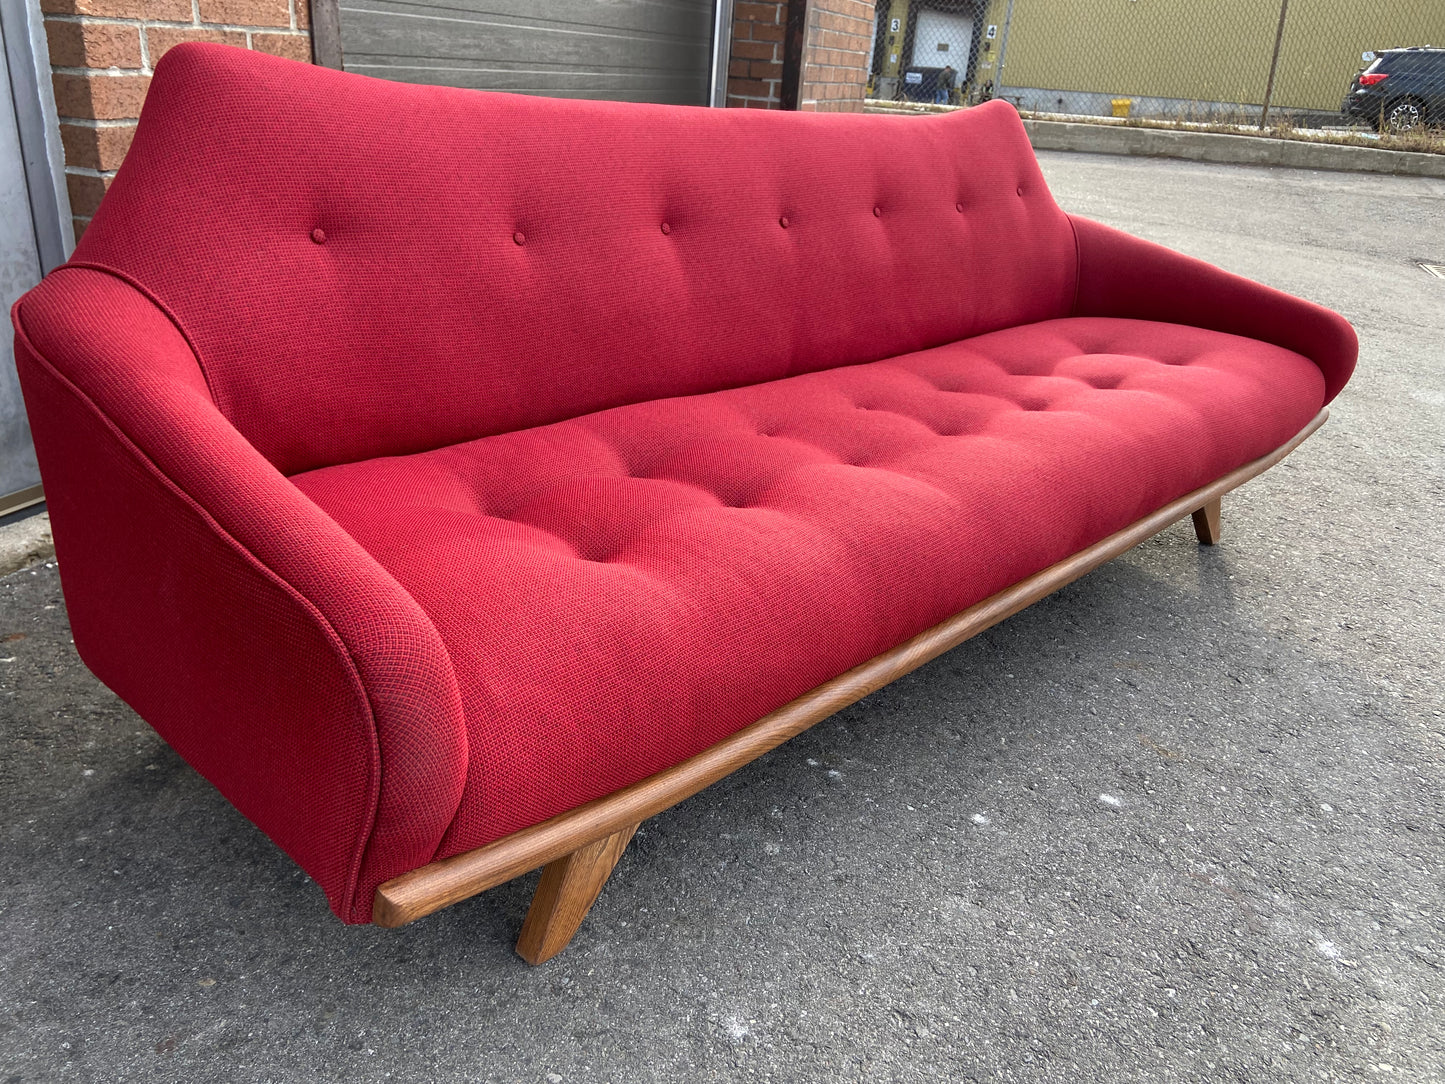 RESTORED Mid Century Modern A. Pearsall Style Gondola Sofa & Lounge Chair